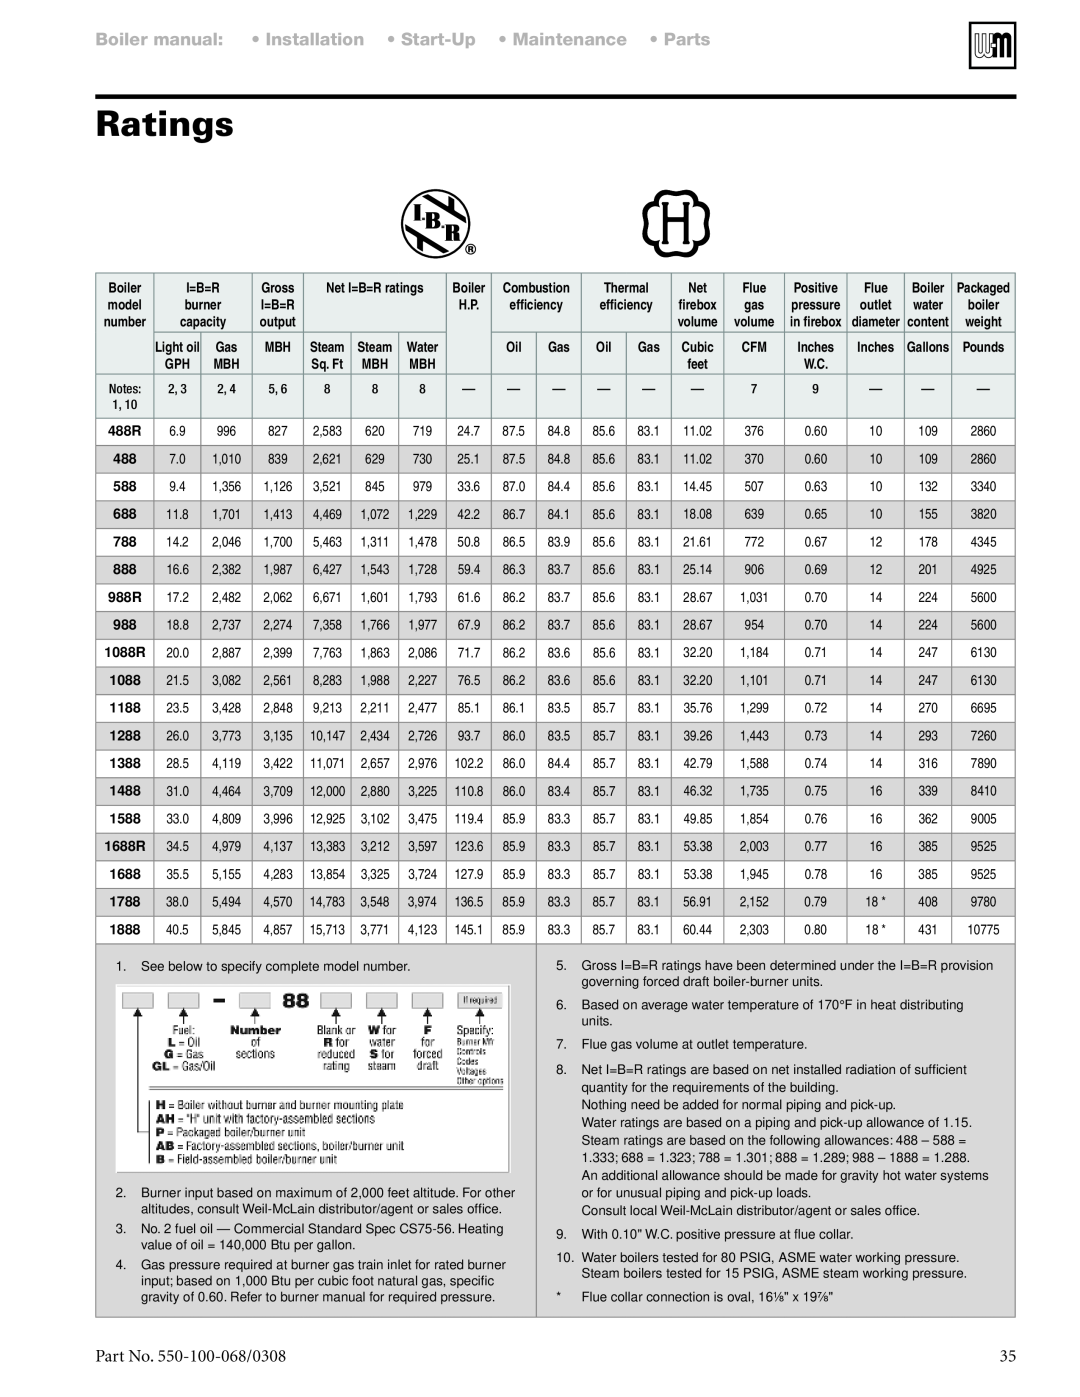 Weil-McLain 88 manual Ratings, Part No. 550-100-068/0308 